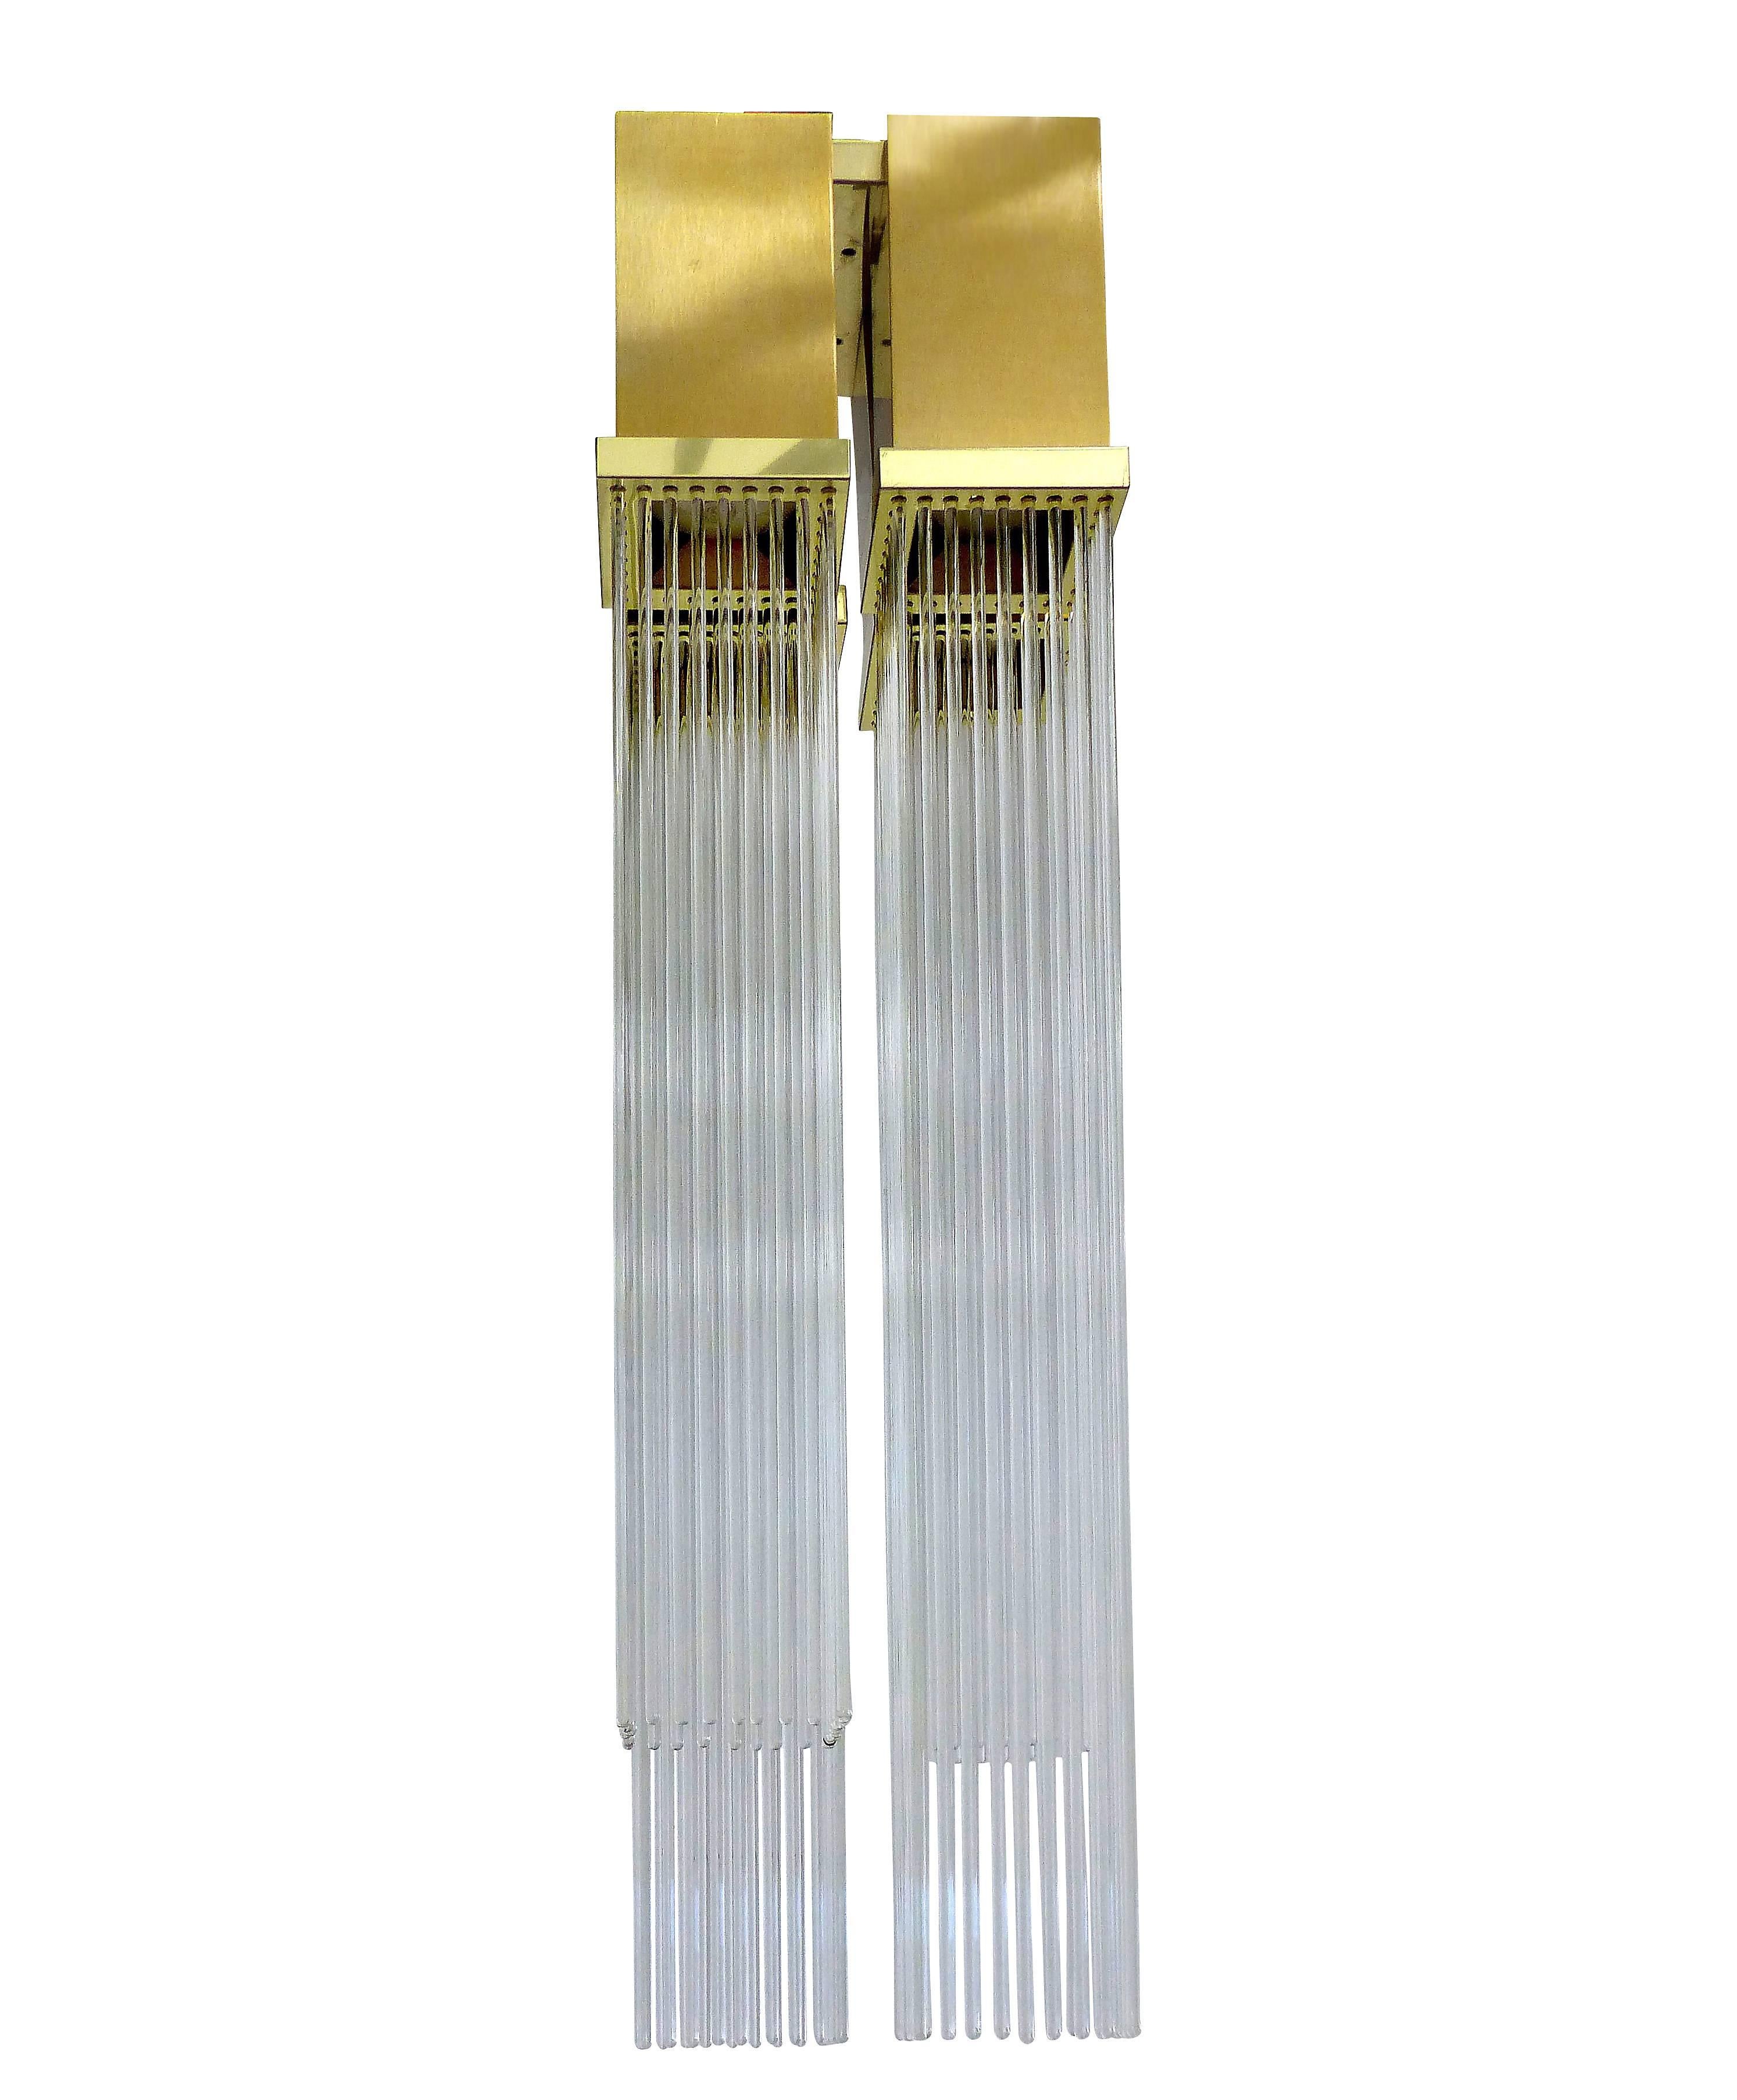 Late 20th Century Gaetano Sciolari Brass and Glass Rod Pendant Light Fixture